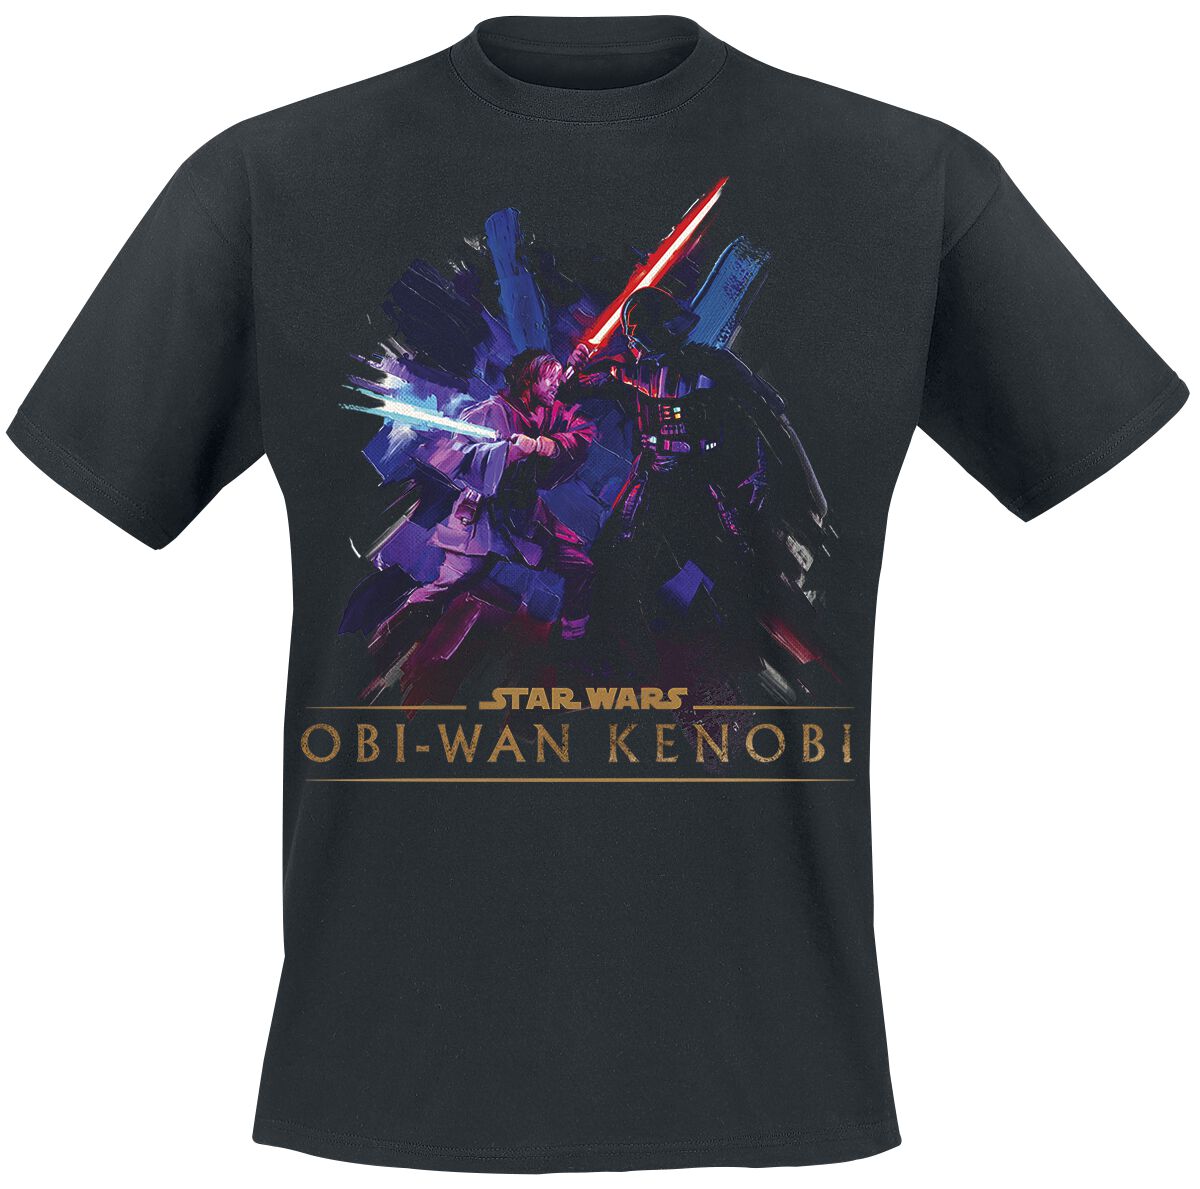 Star Wars Obi-Wan Kenobi - Vintage T-Shirt schwarz in XL